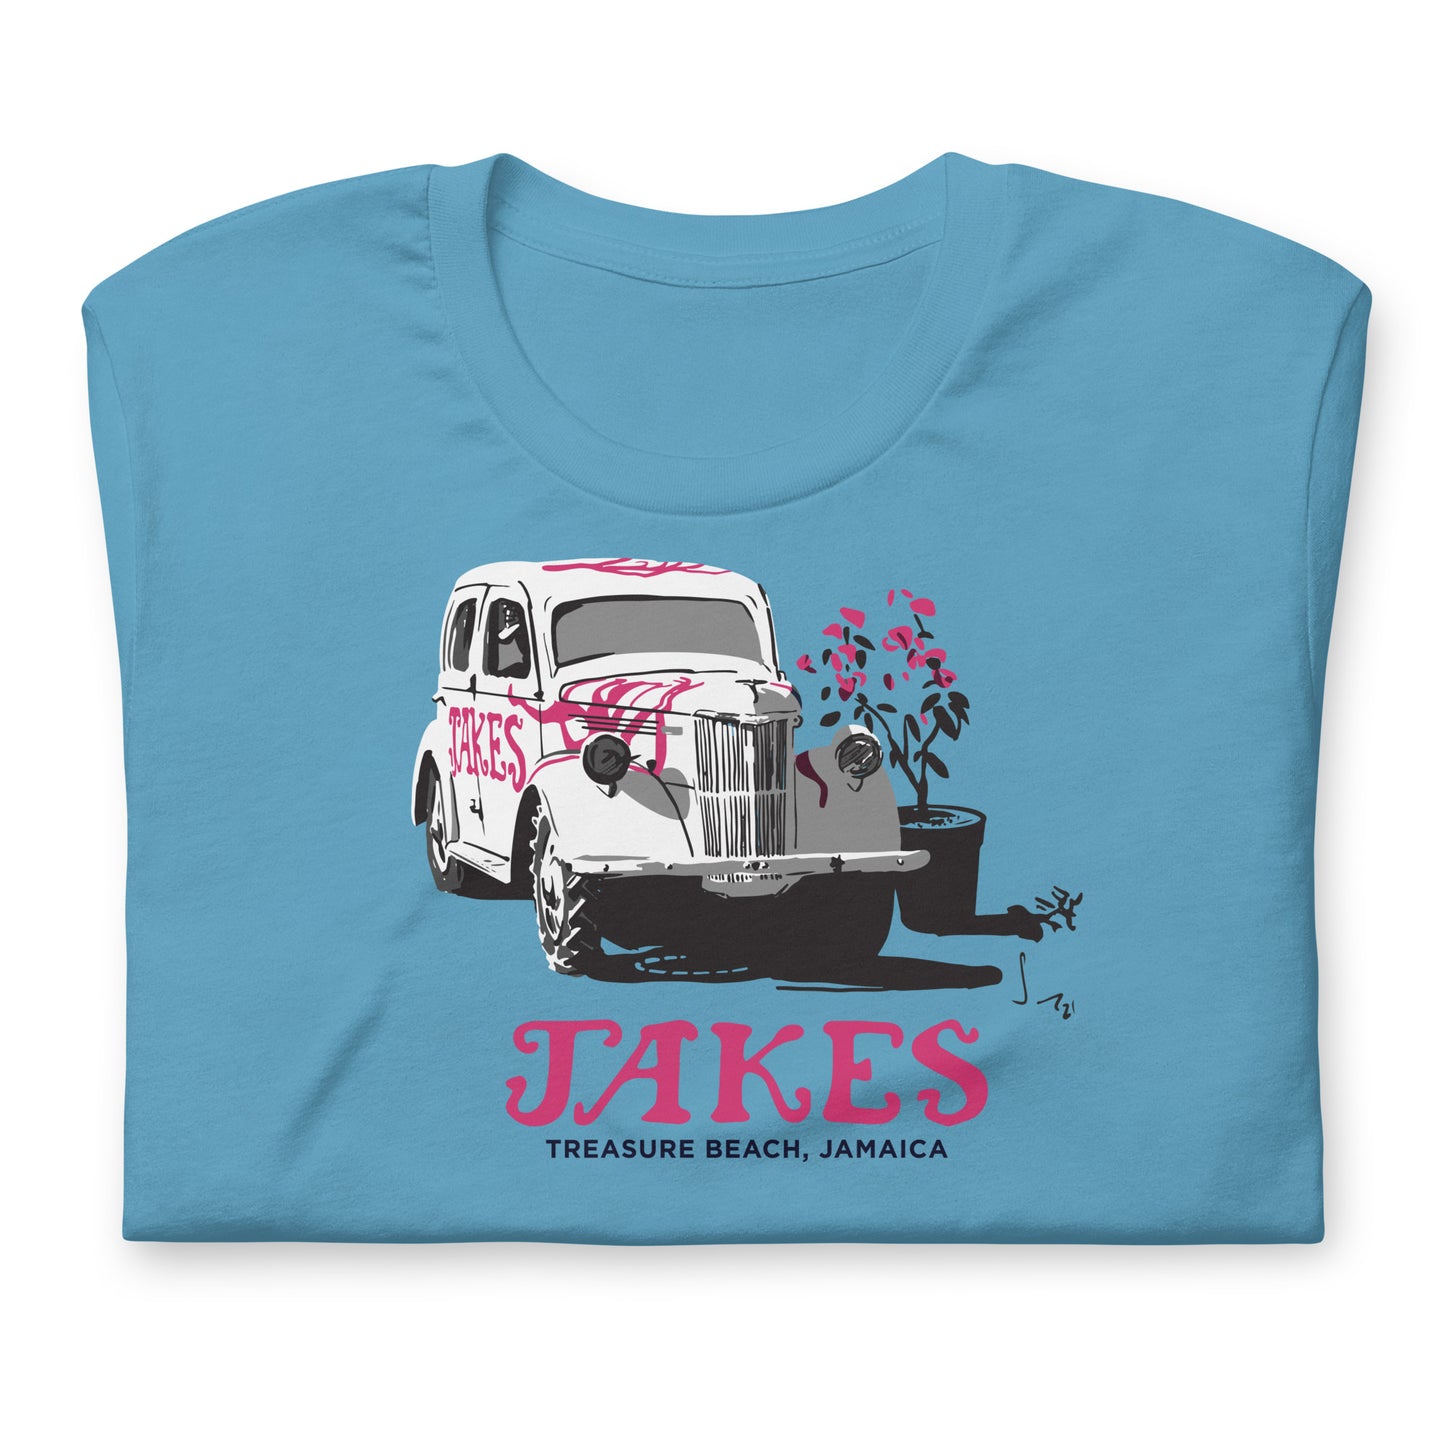 Artist Sean Henry’s Design: Jakes’ Classic Car Unisex T-Shirt in Multiple Colors